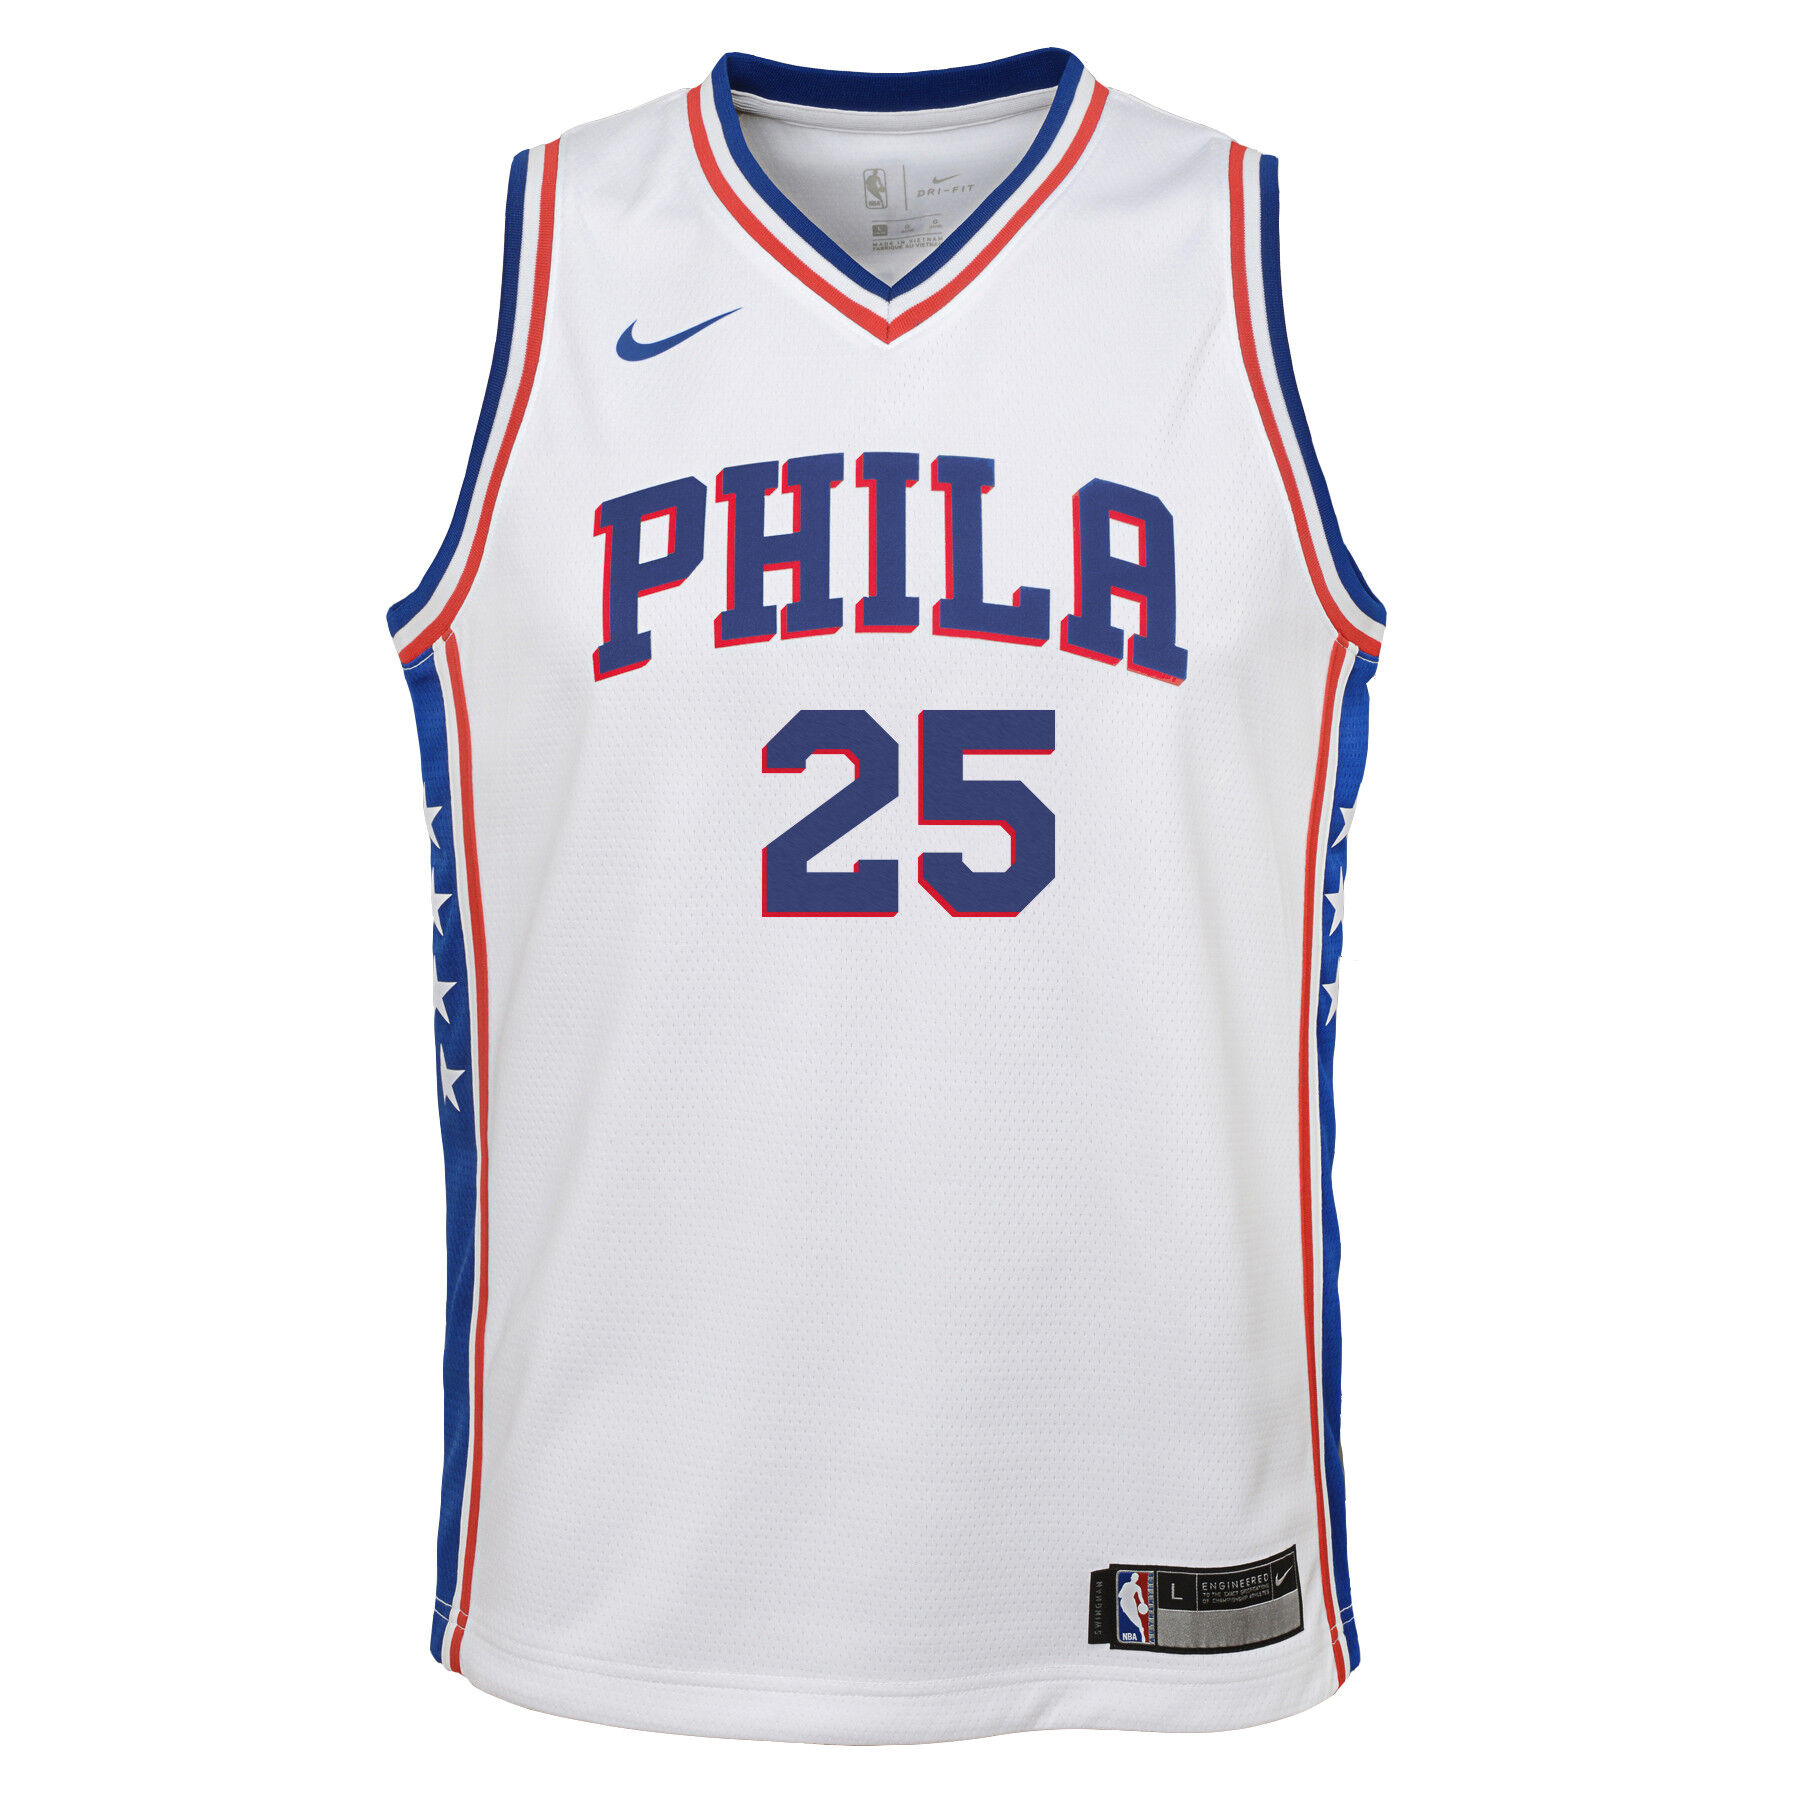 philadelphia 76ers jersey 2019